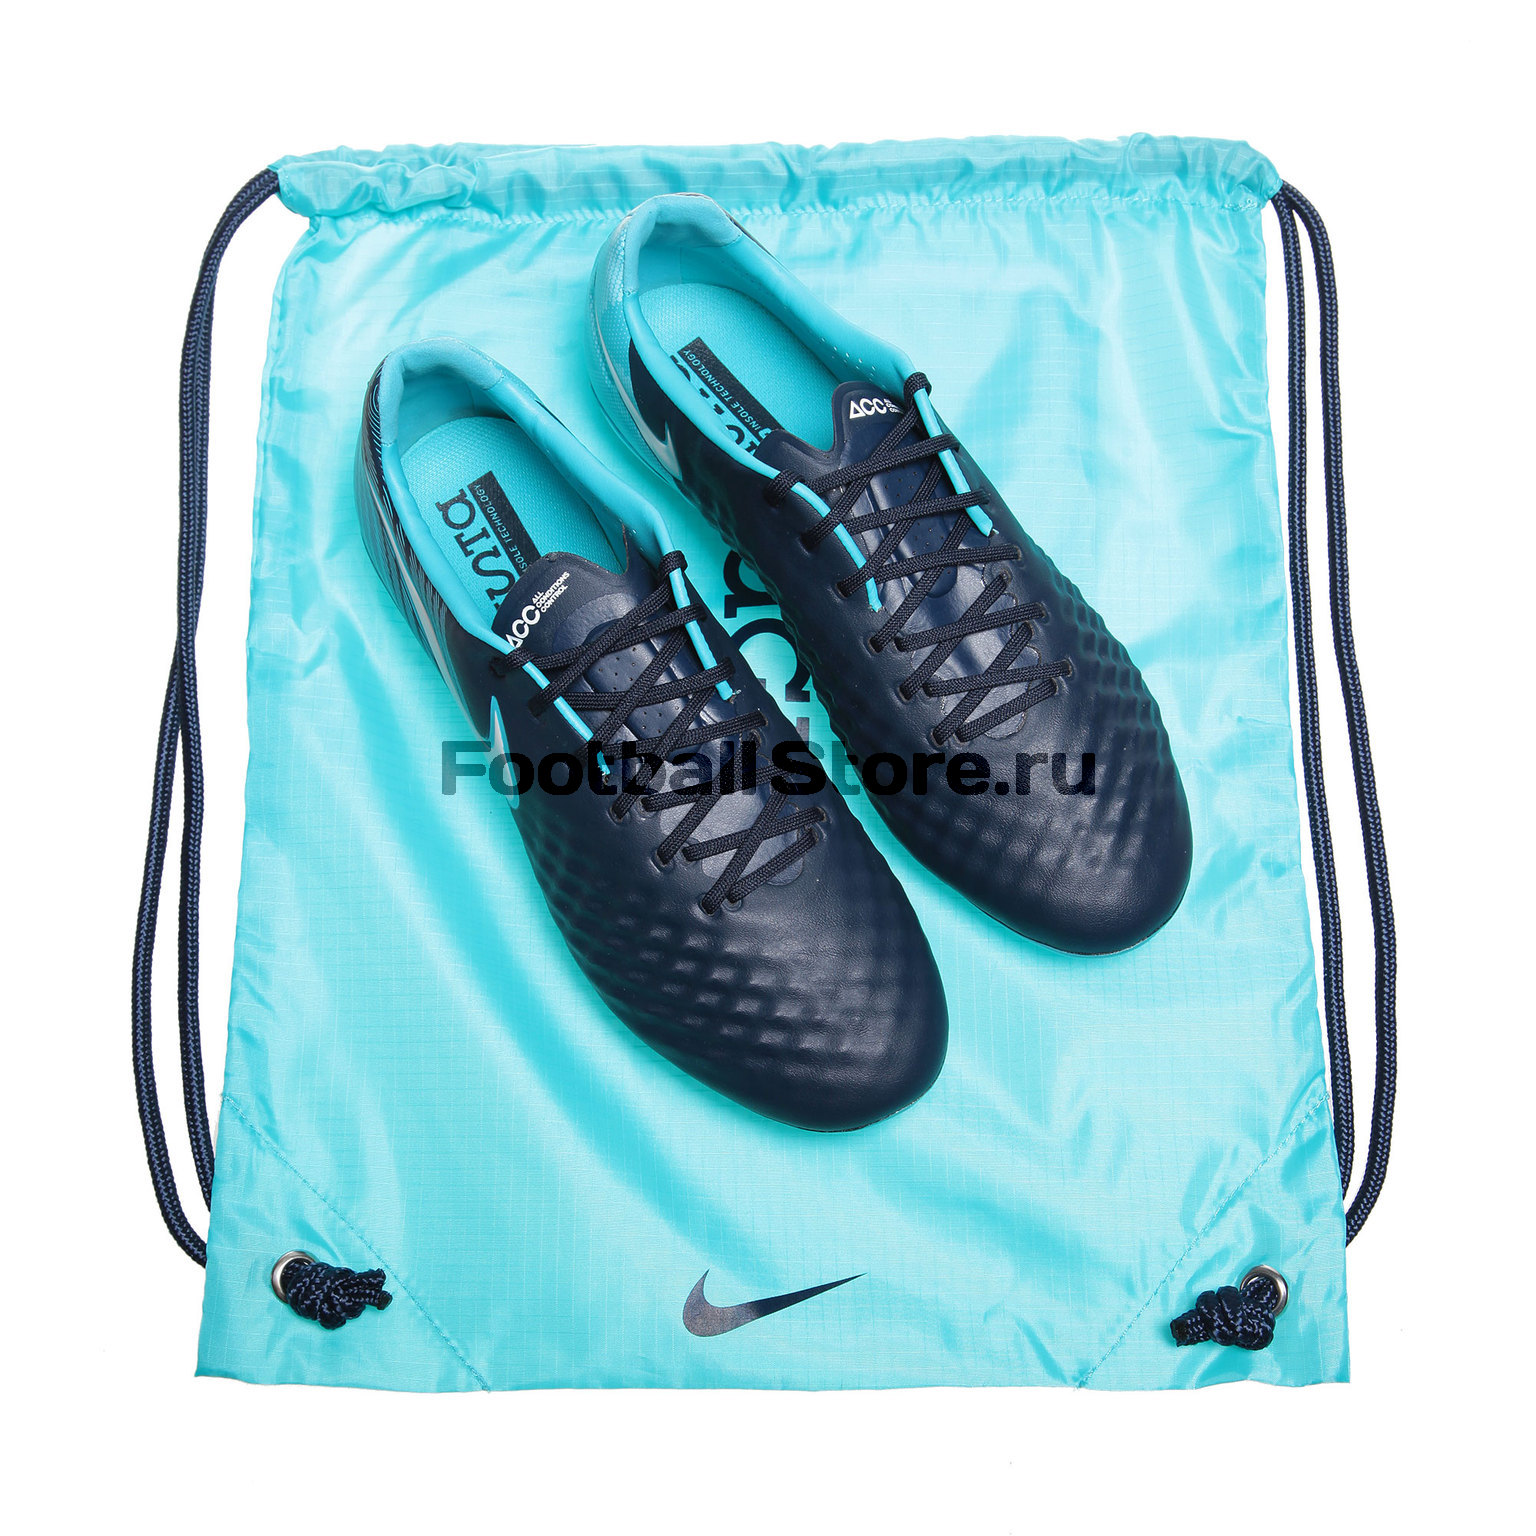 Бутсы Nike Magista Opus II FG 843813-414